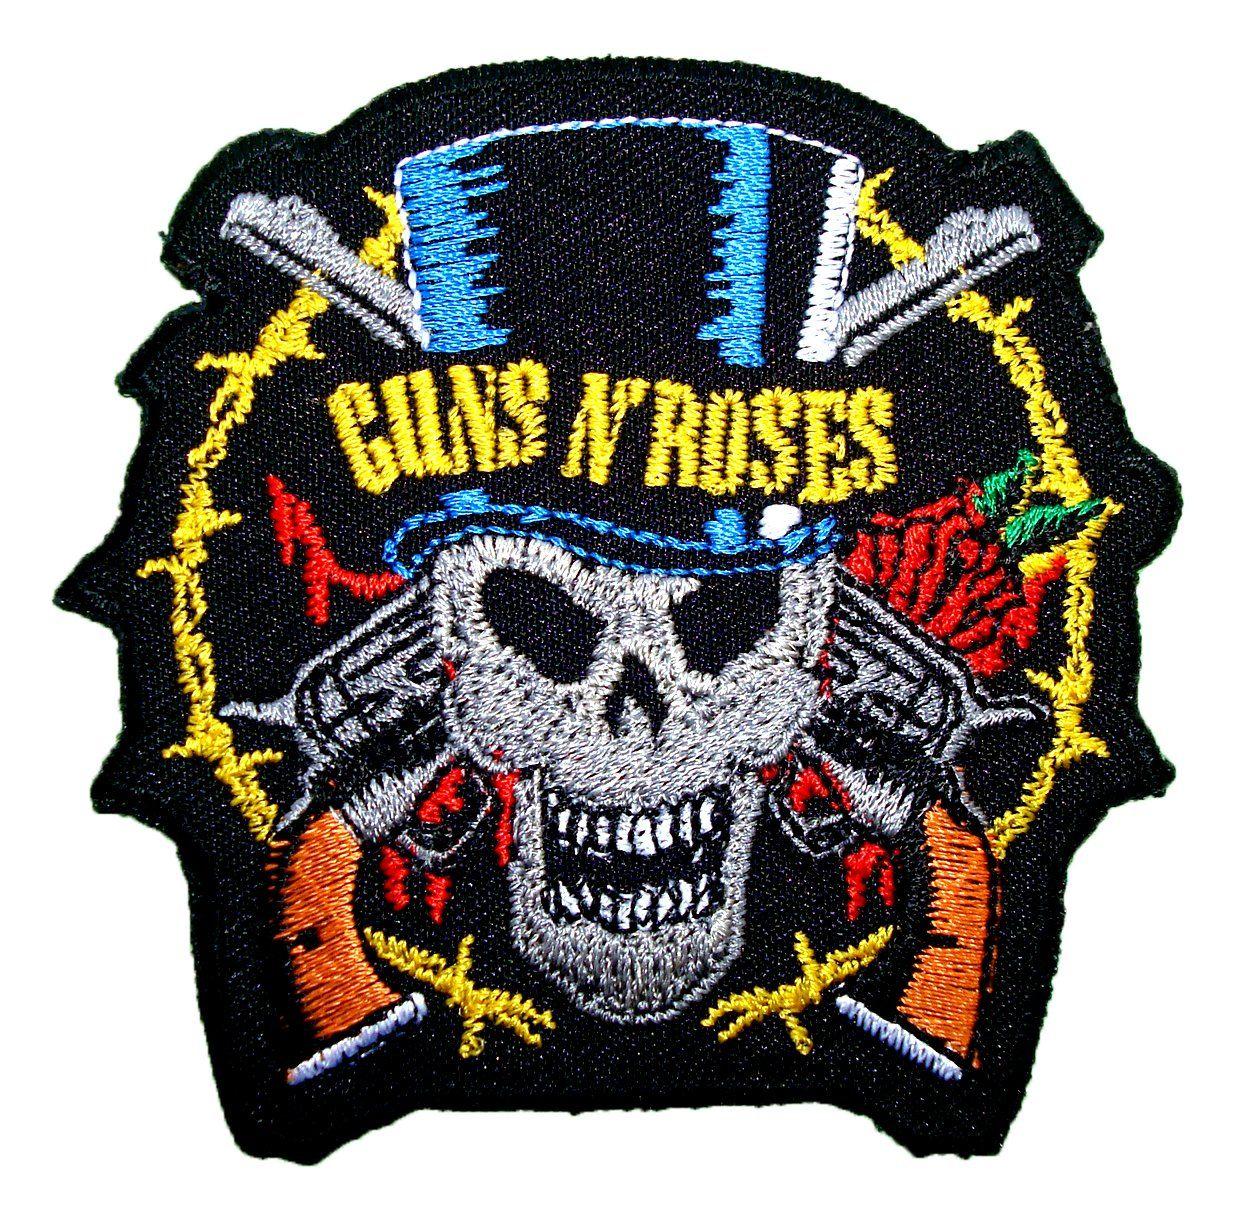 Best Rock Band Logo - Amazon.com: Guns n Roses Rock band Symbol t Shirts MG16 iron on Patches